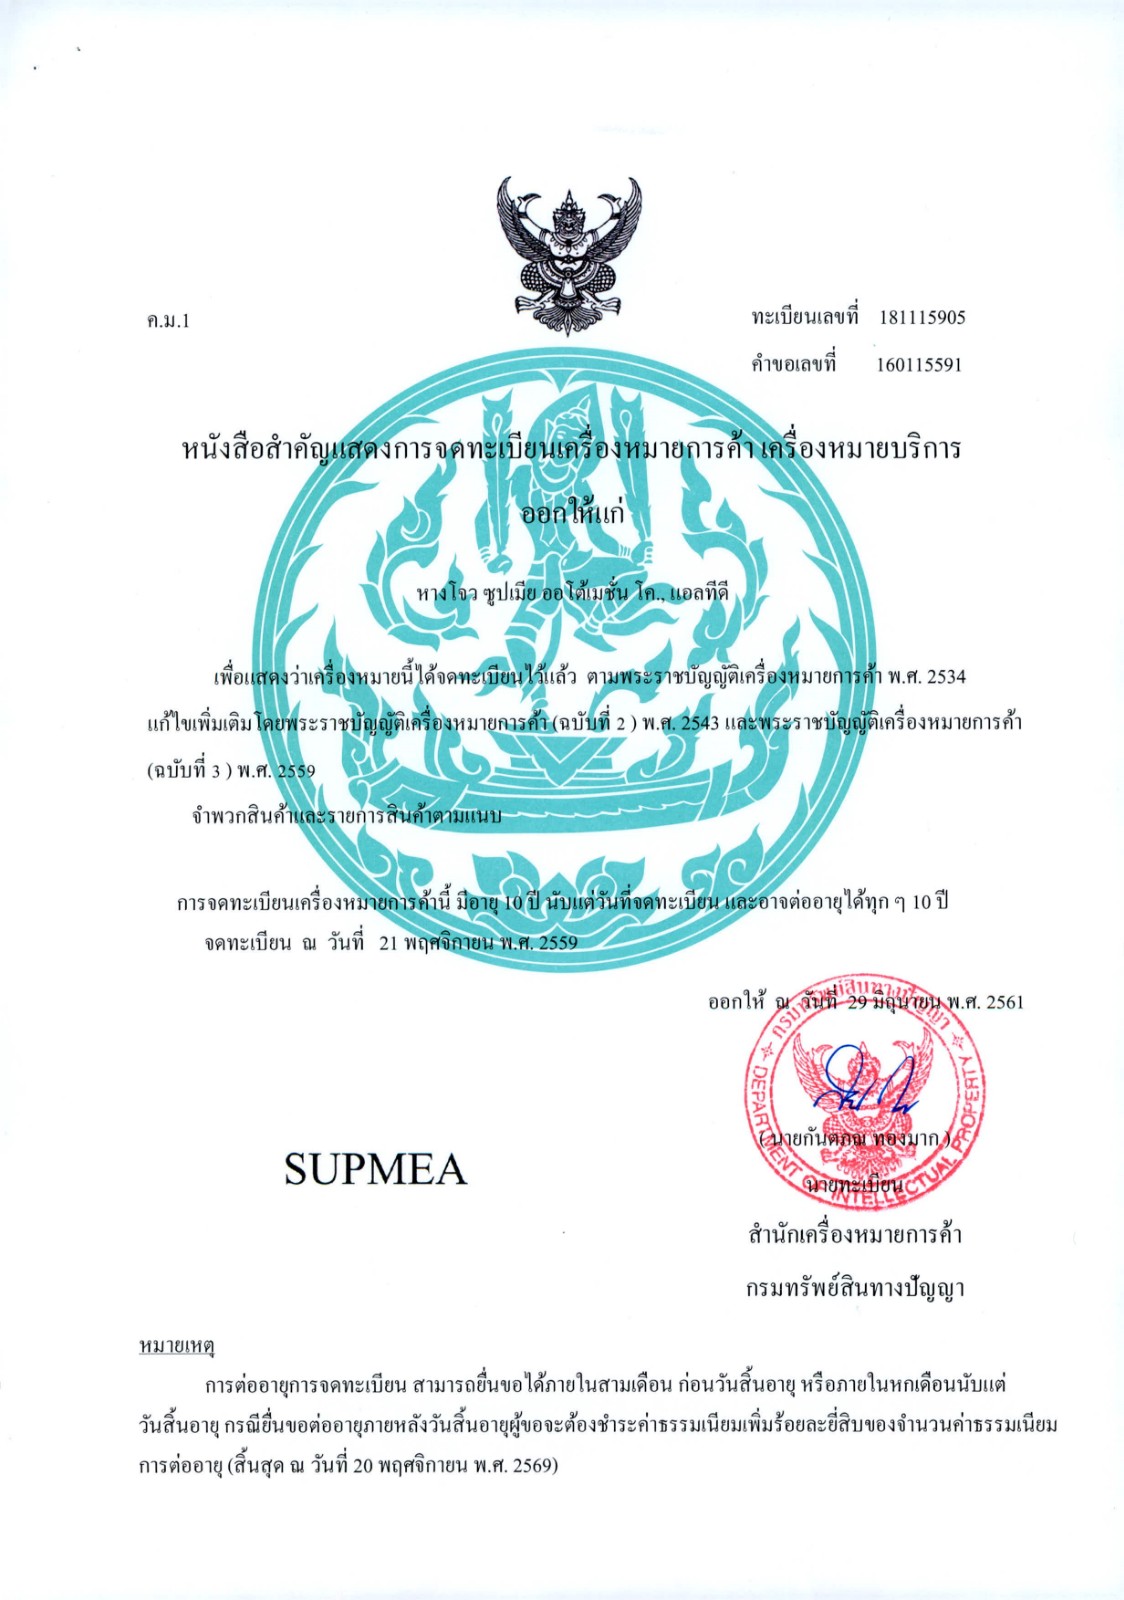 Supmea Thailand trademark.jpg